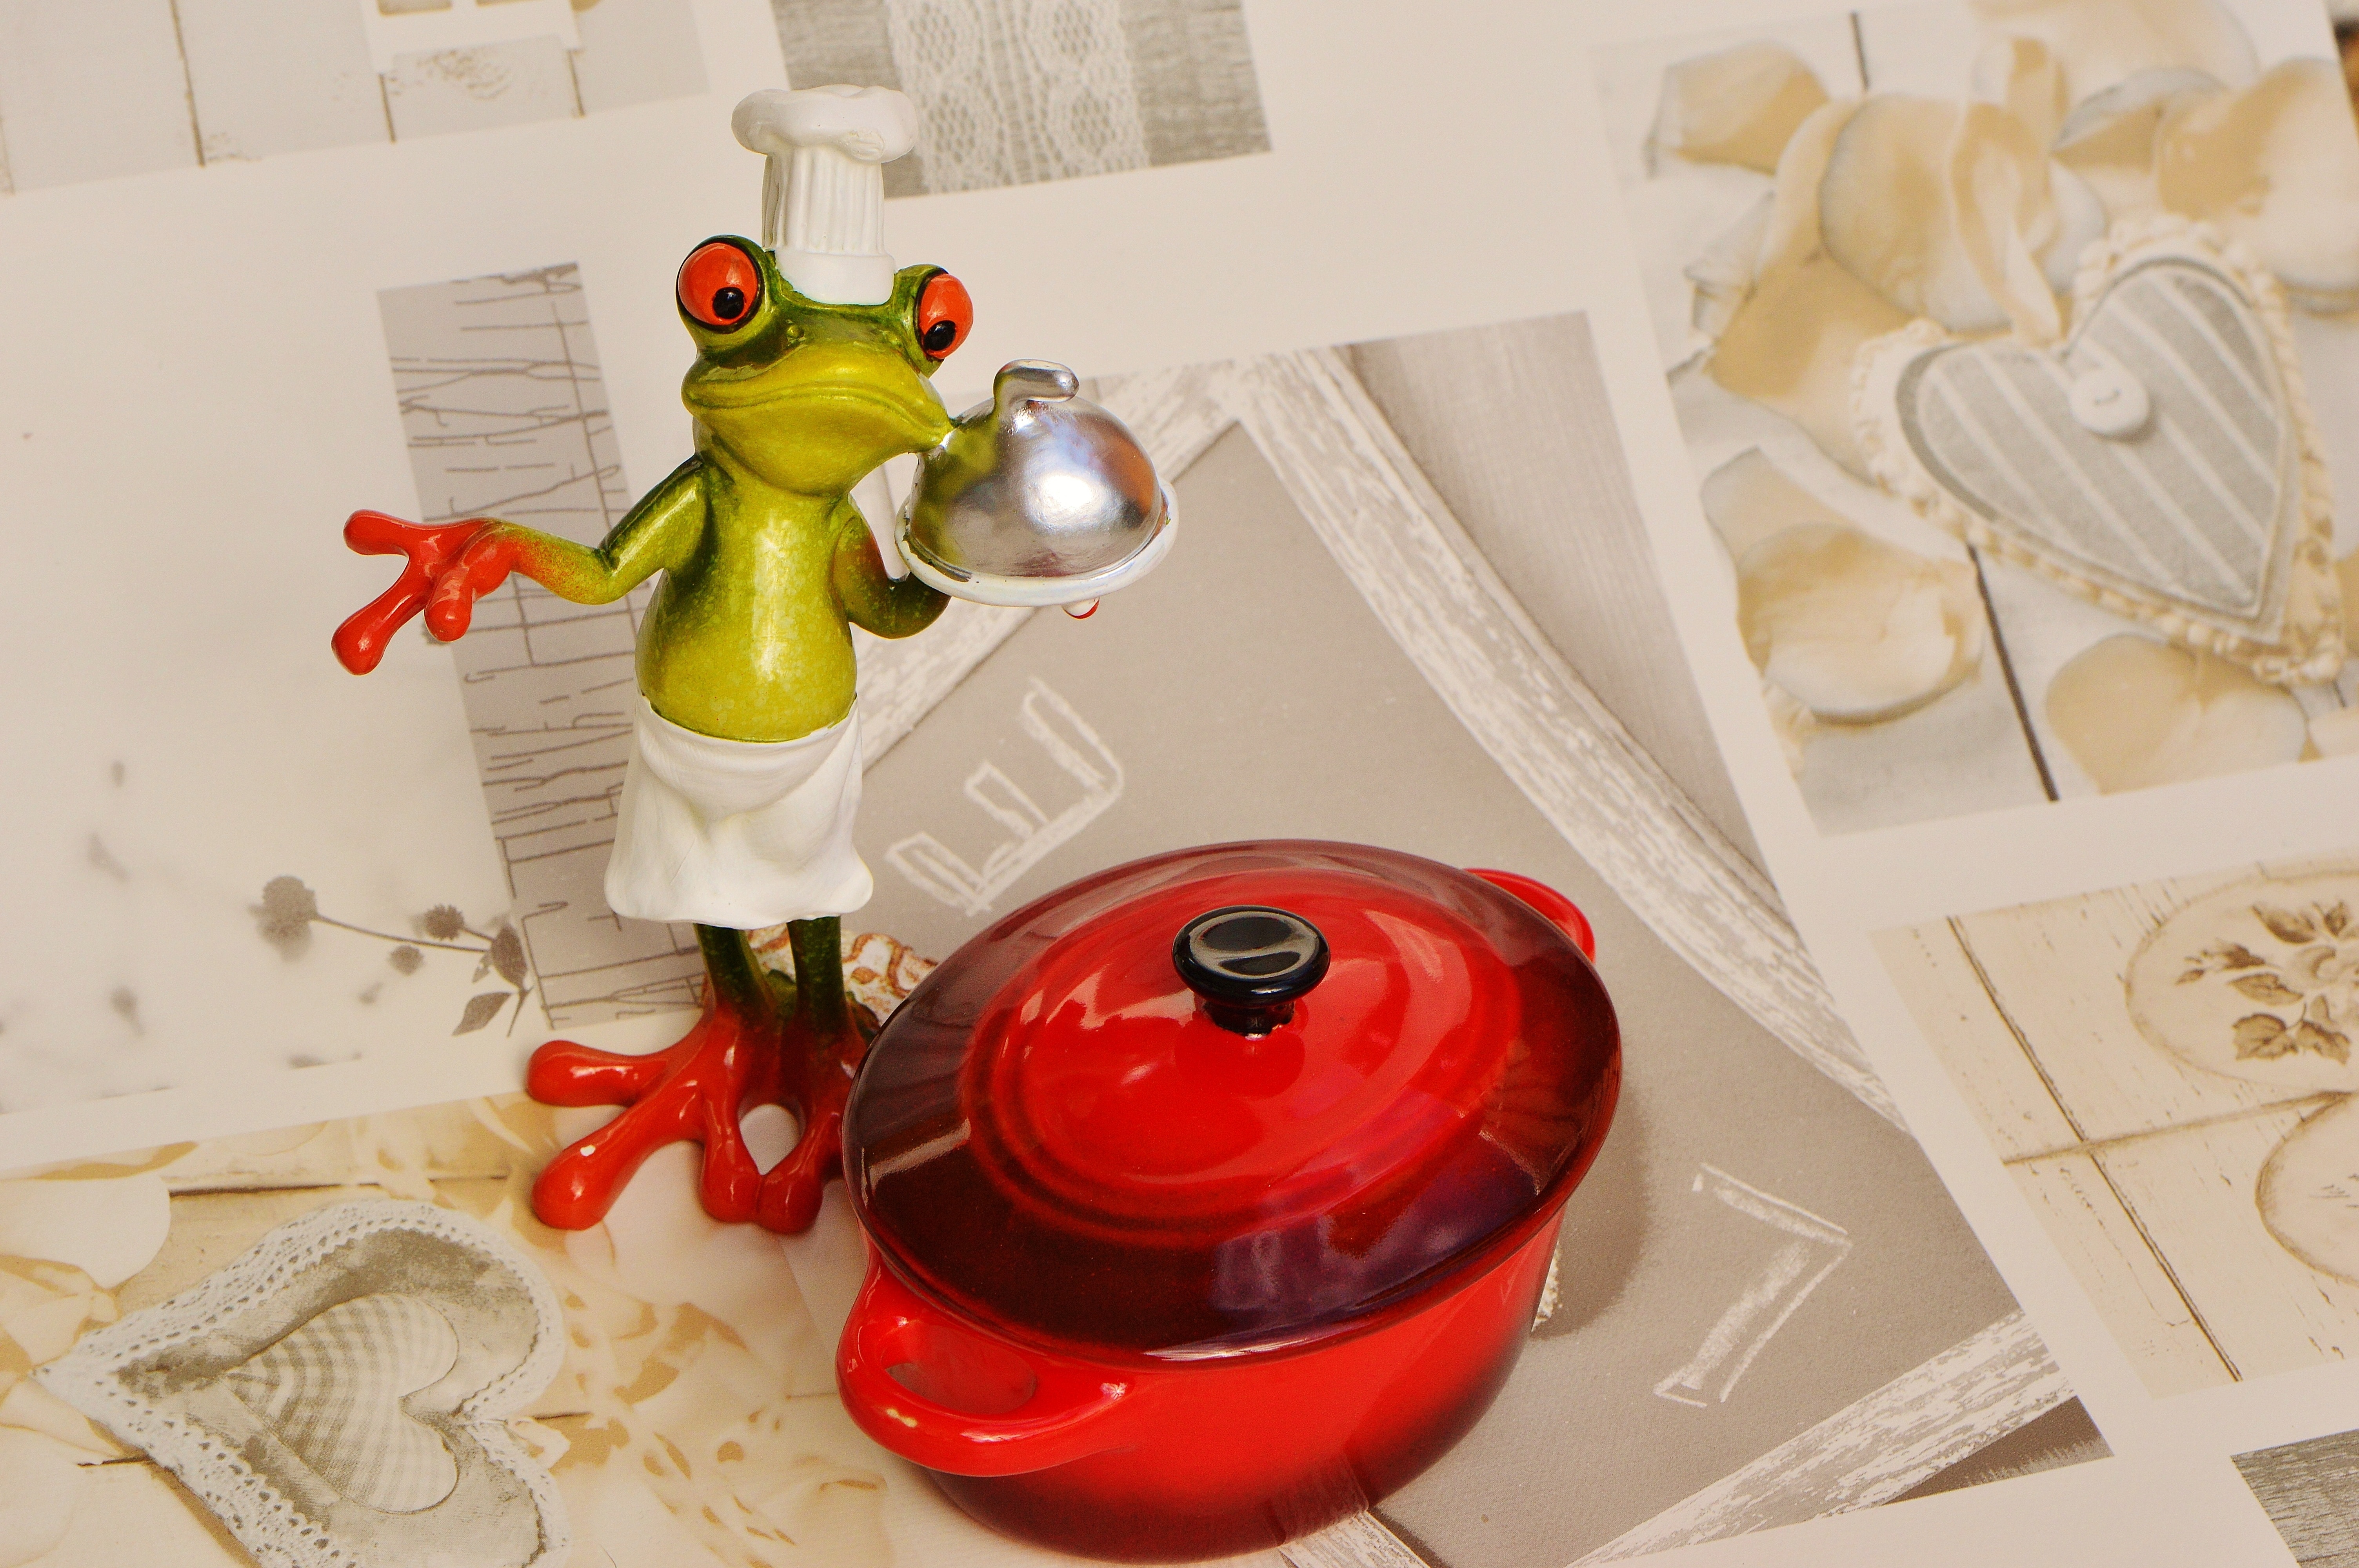 green chef frog figurine beside red casserole